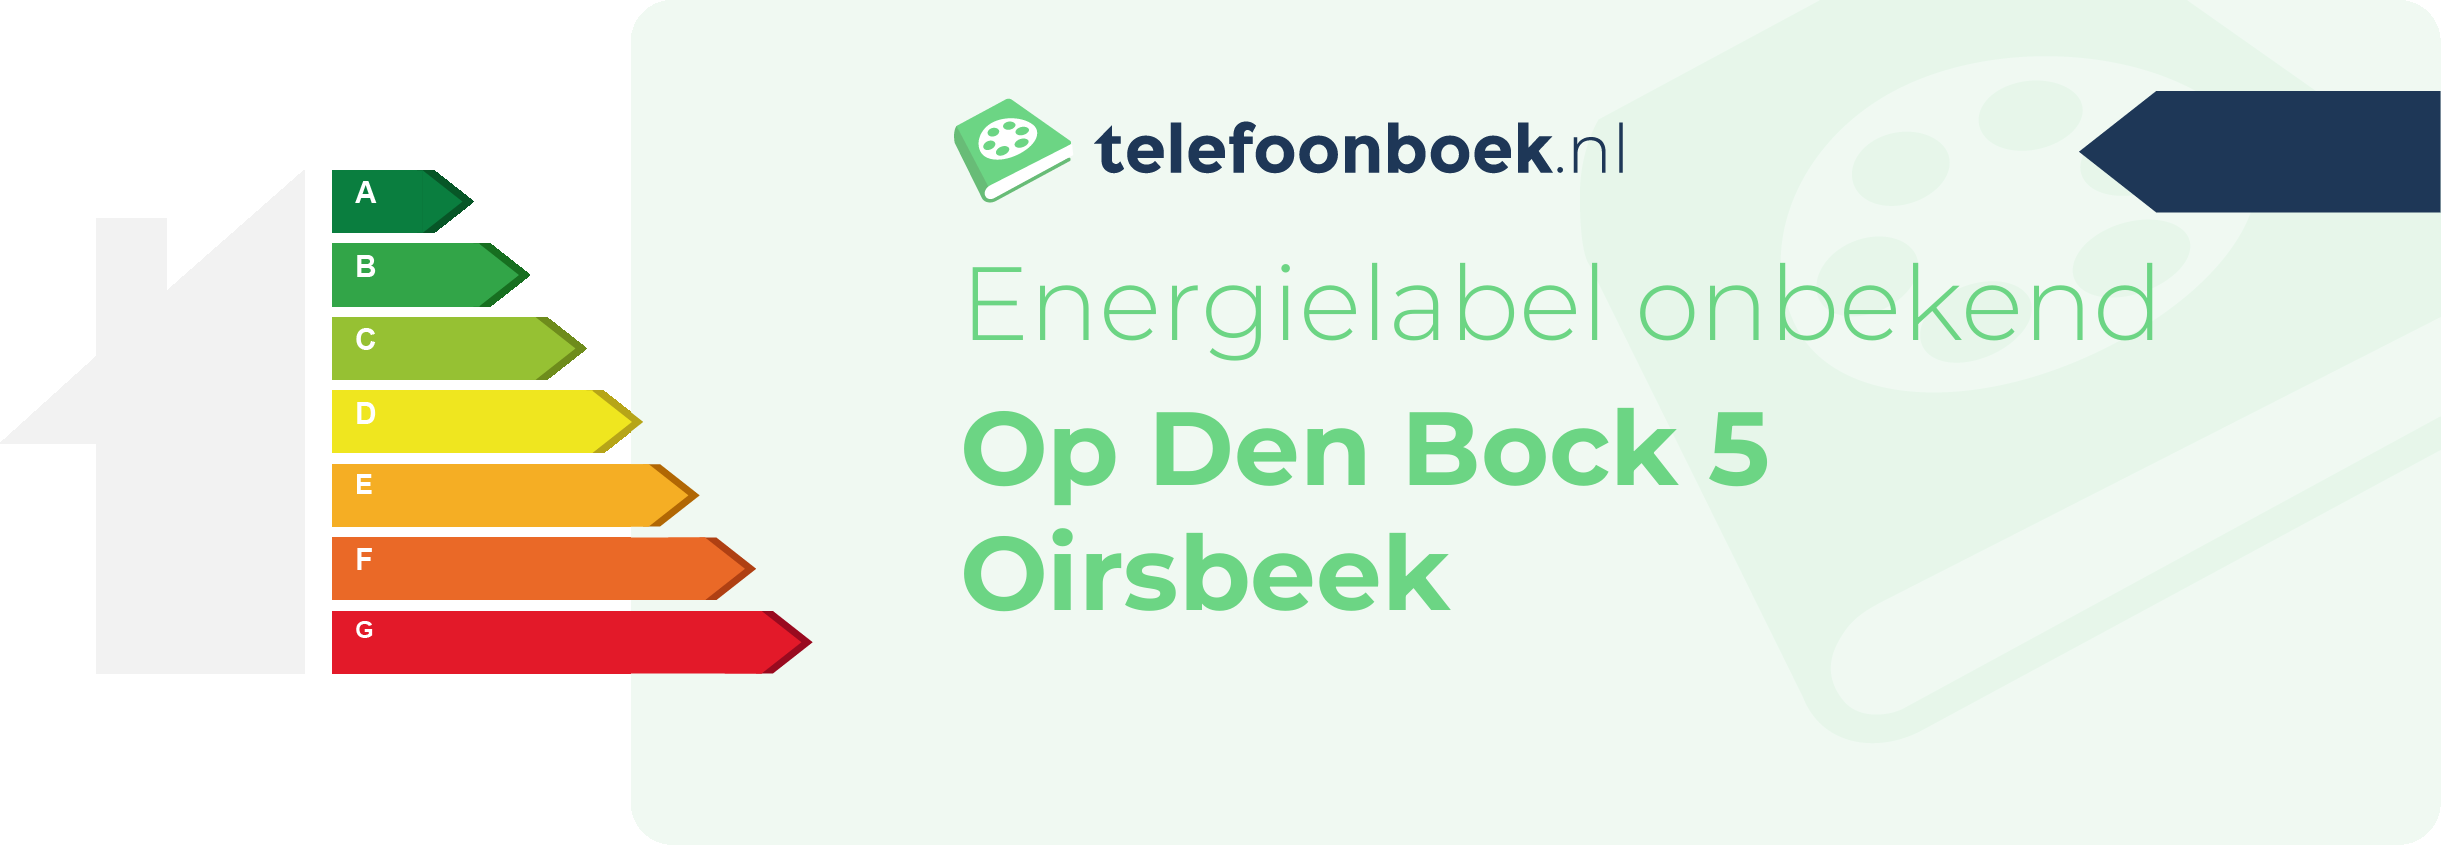 Energielabel Op Den Bock 5 Oirsbeek